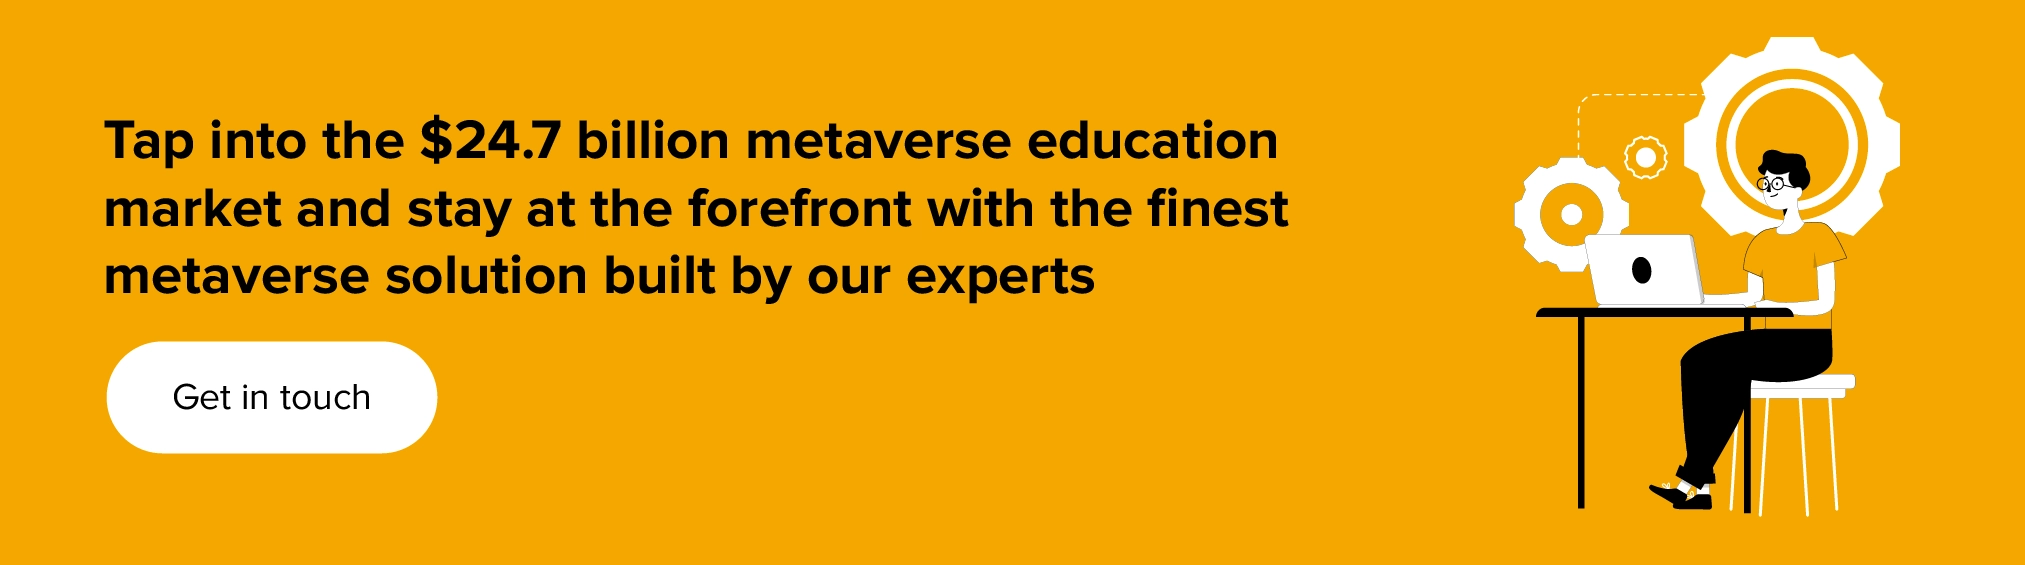 Metaverse education market